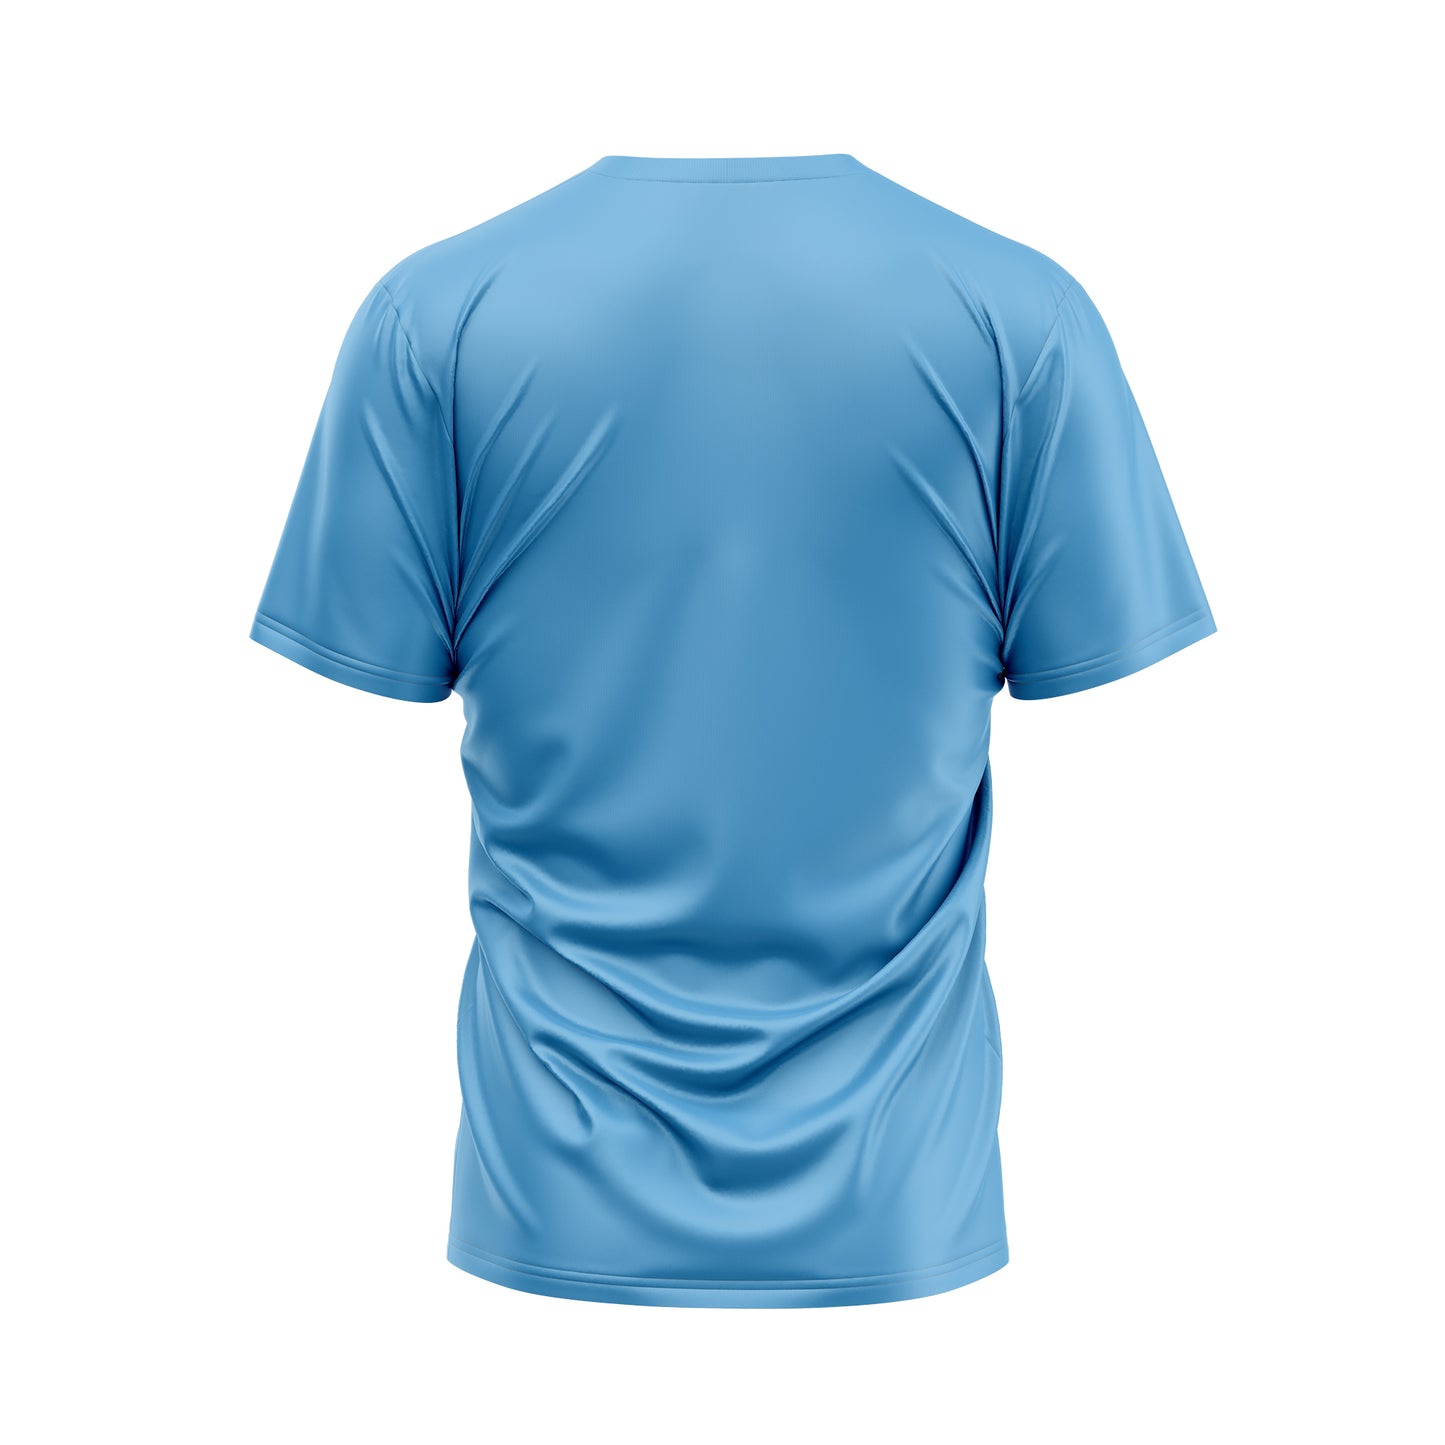 Columbia Blue GBC Performance Shirt